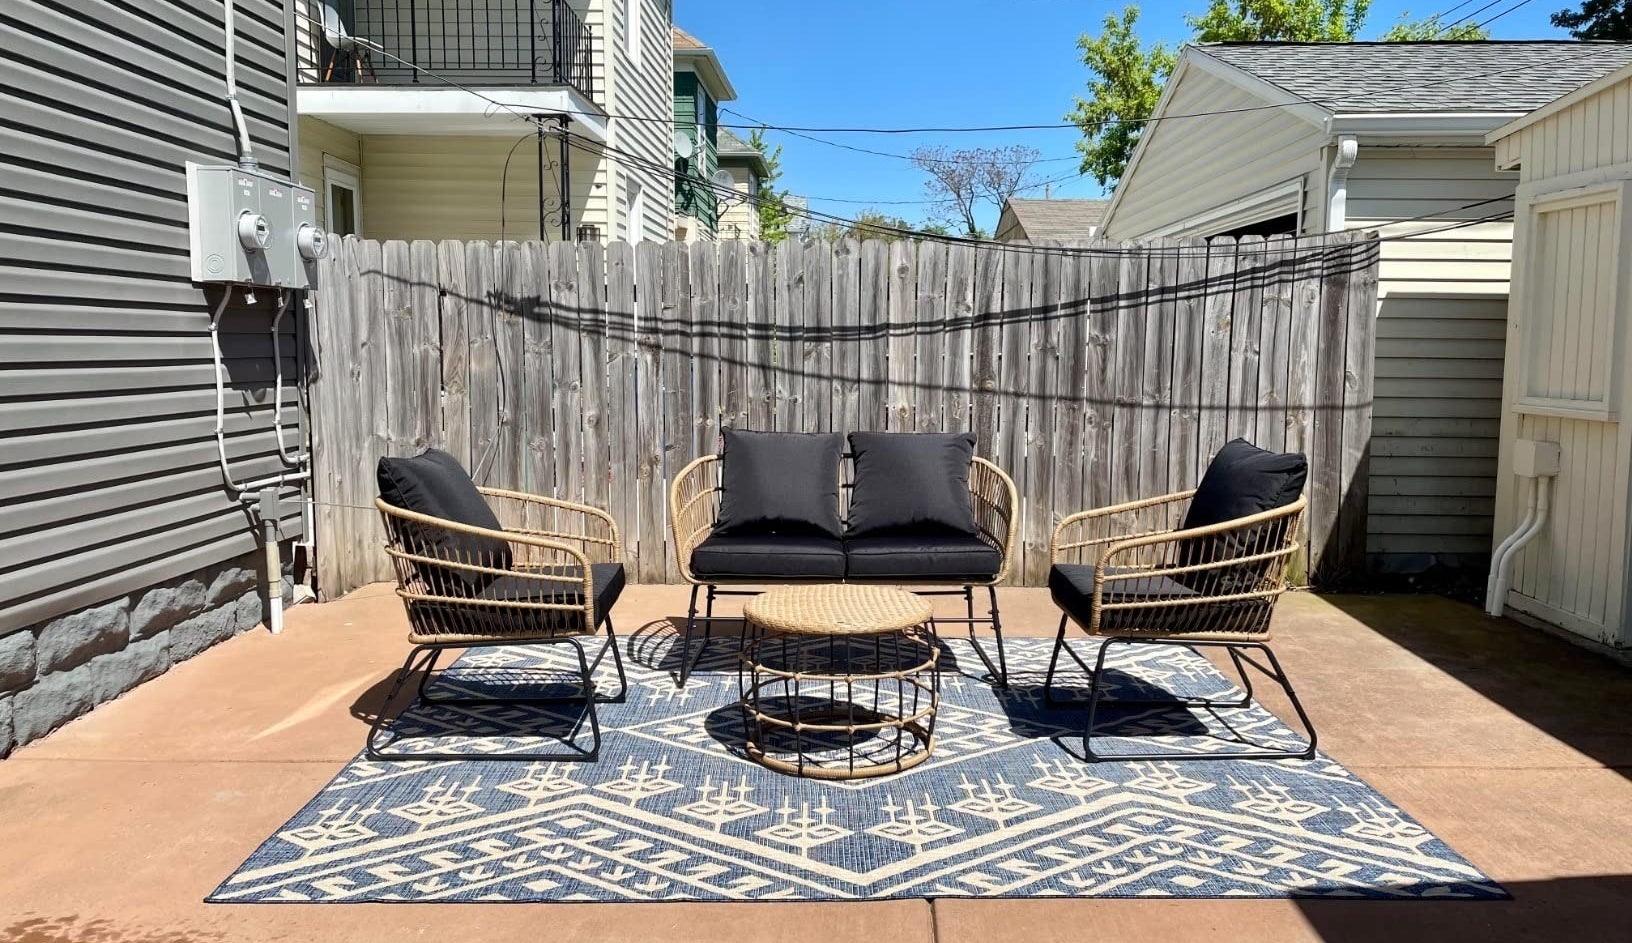 the four-piece black patio set